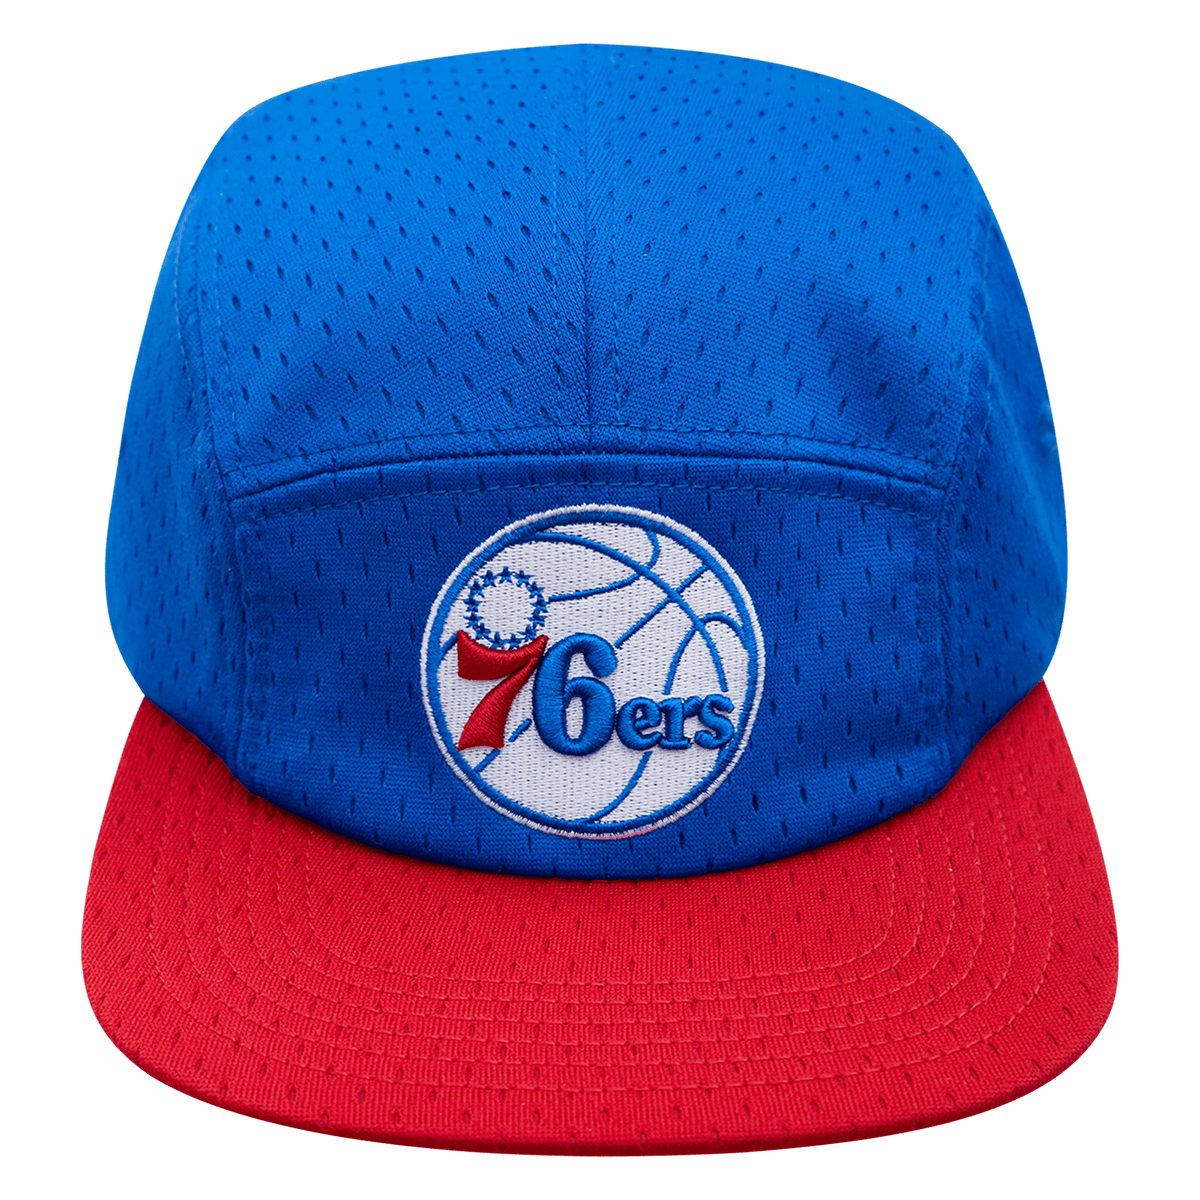 NBA PHILADELPHIA 76ERS LOGO MESH UNISEX 5 PANEL HAT (ROYAL BLUE)